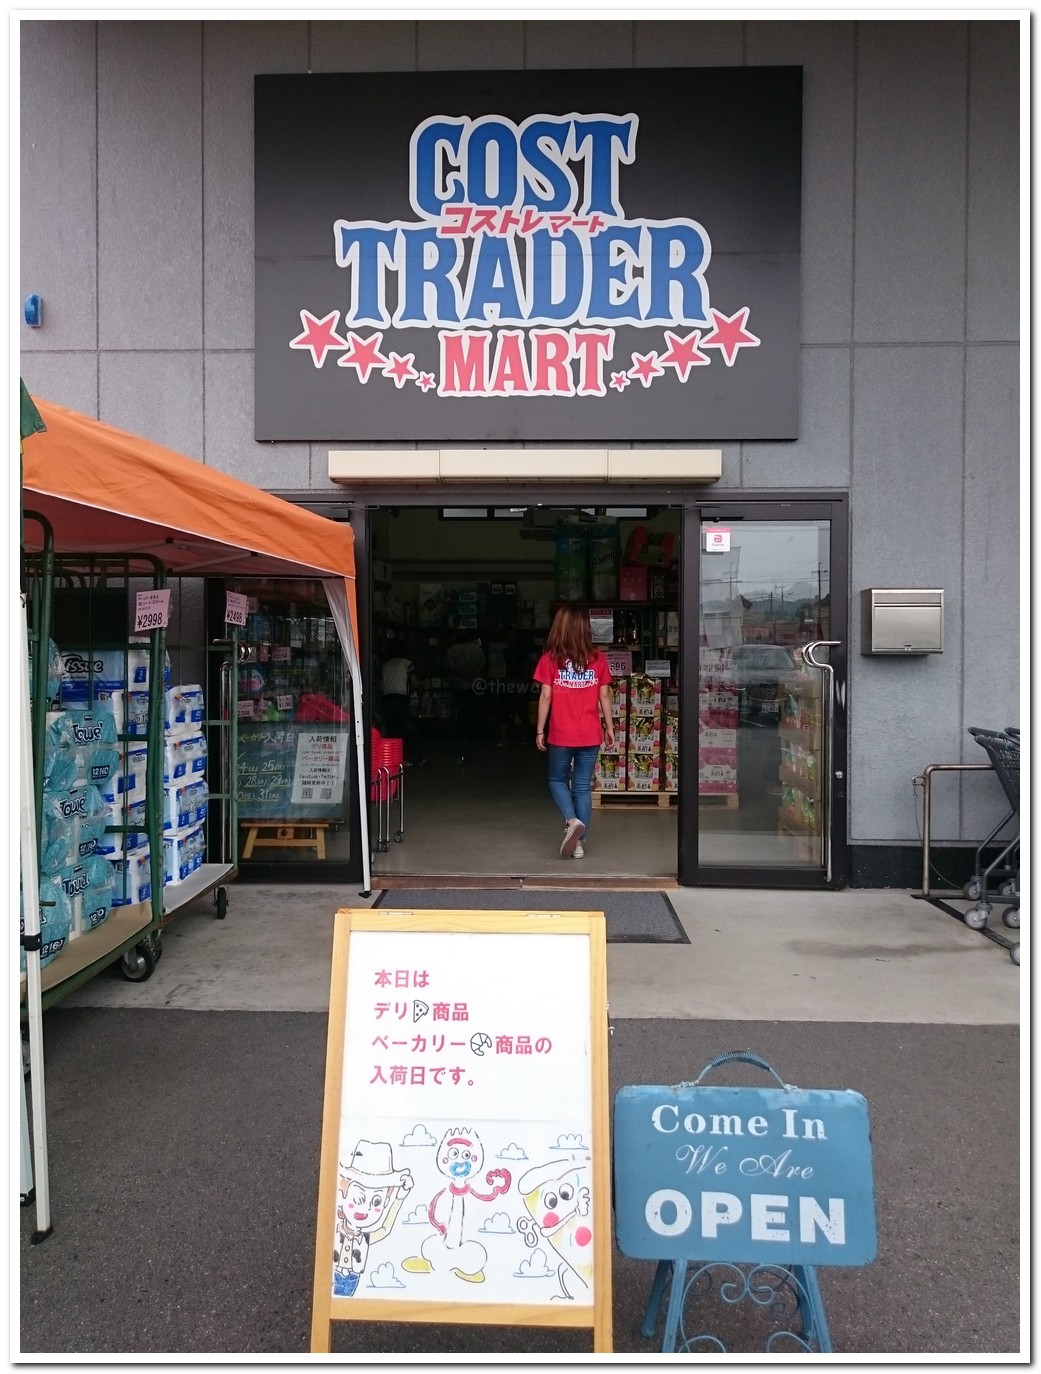 Cost Trader Mart in Asakuchi City (Okayama)